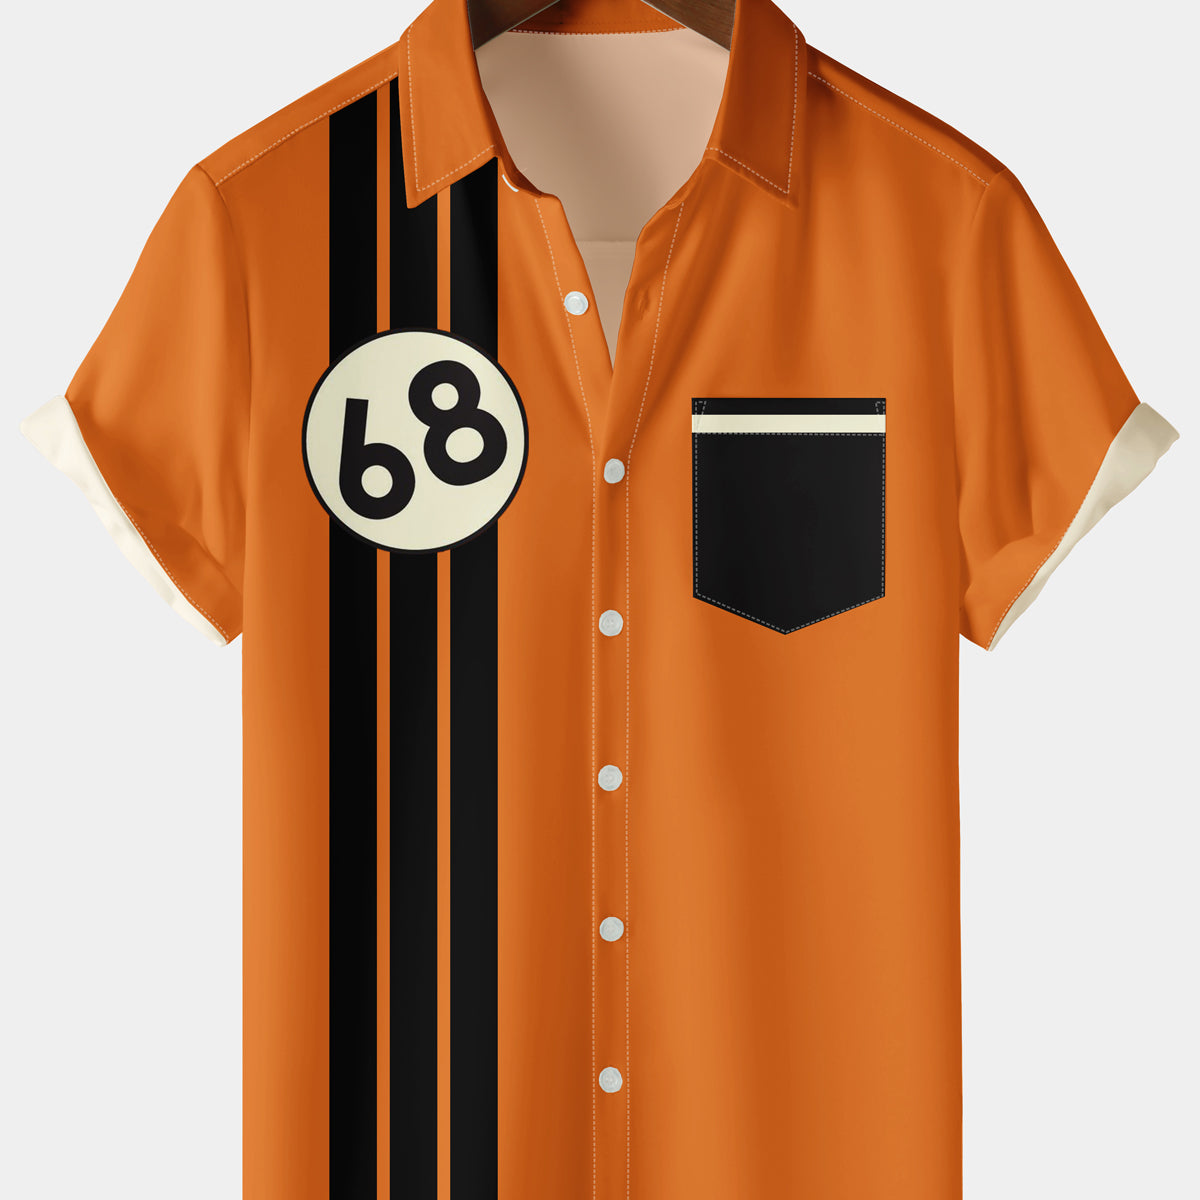 Men's Casual Orange White Stripe Size 68 Short Sleeve Shirt